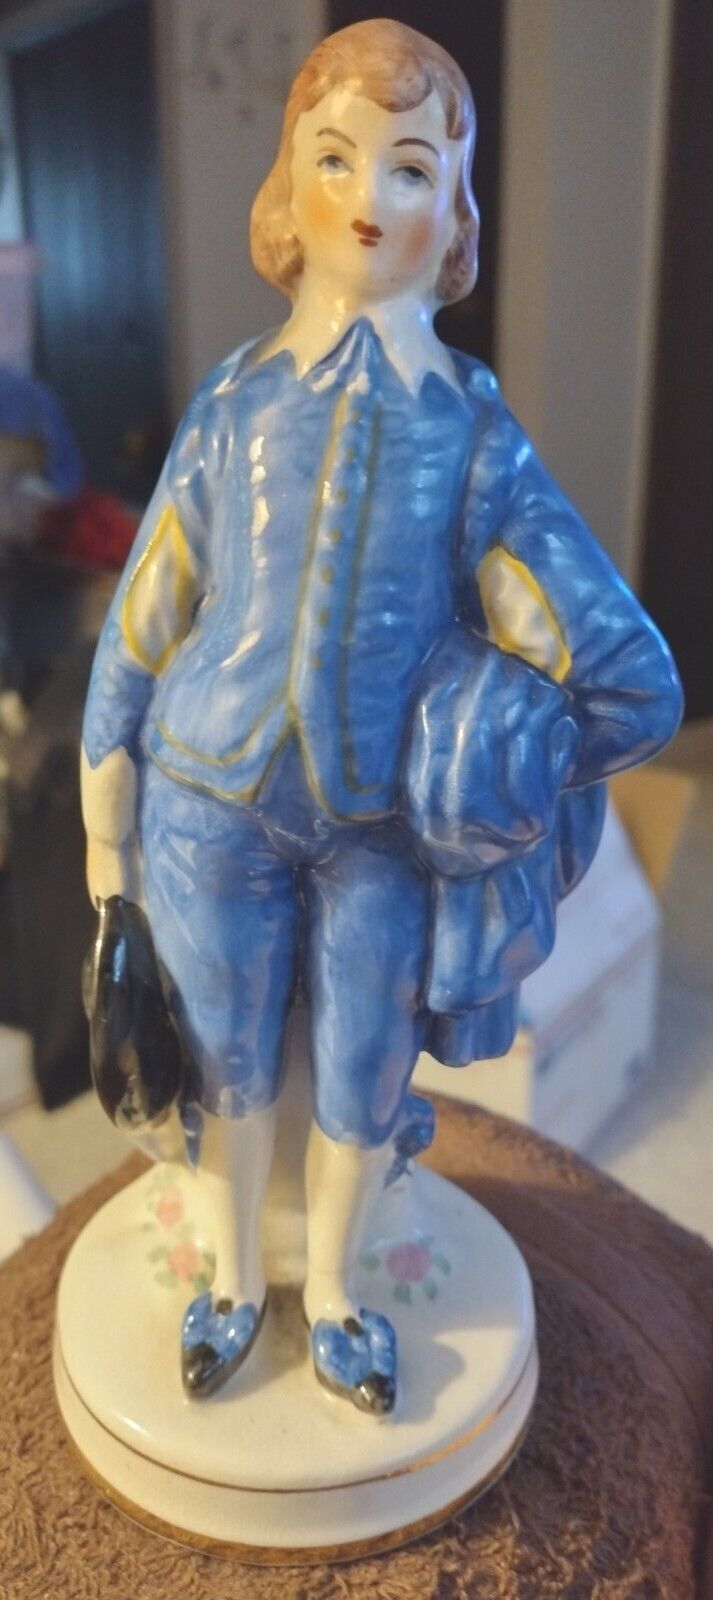 Vintage Coventry 5042A Blue Boy Figurine 22k Gold trimmed